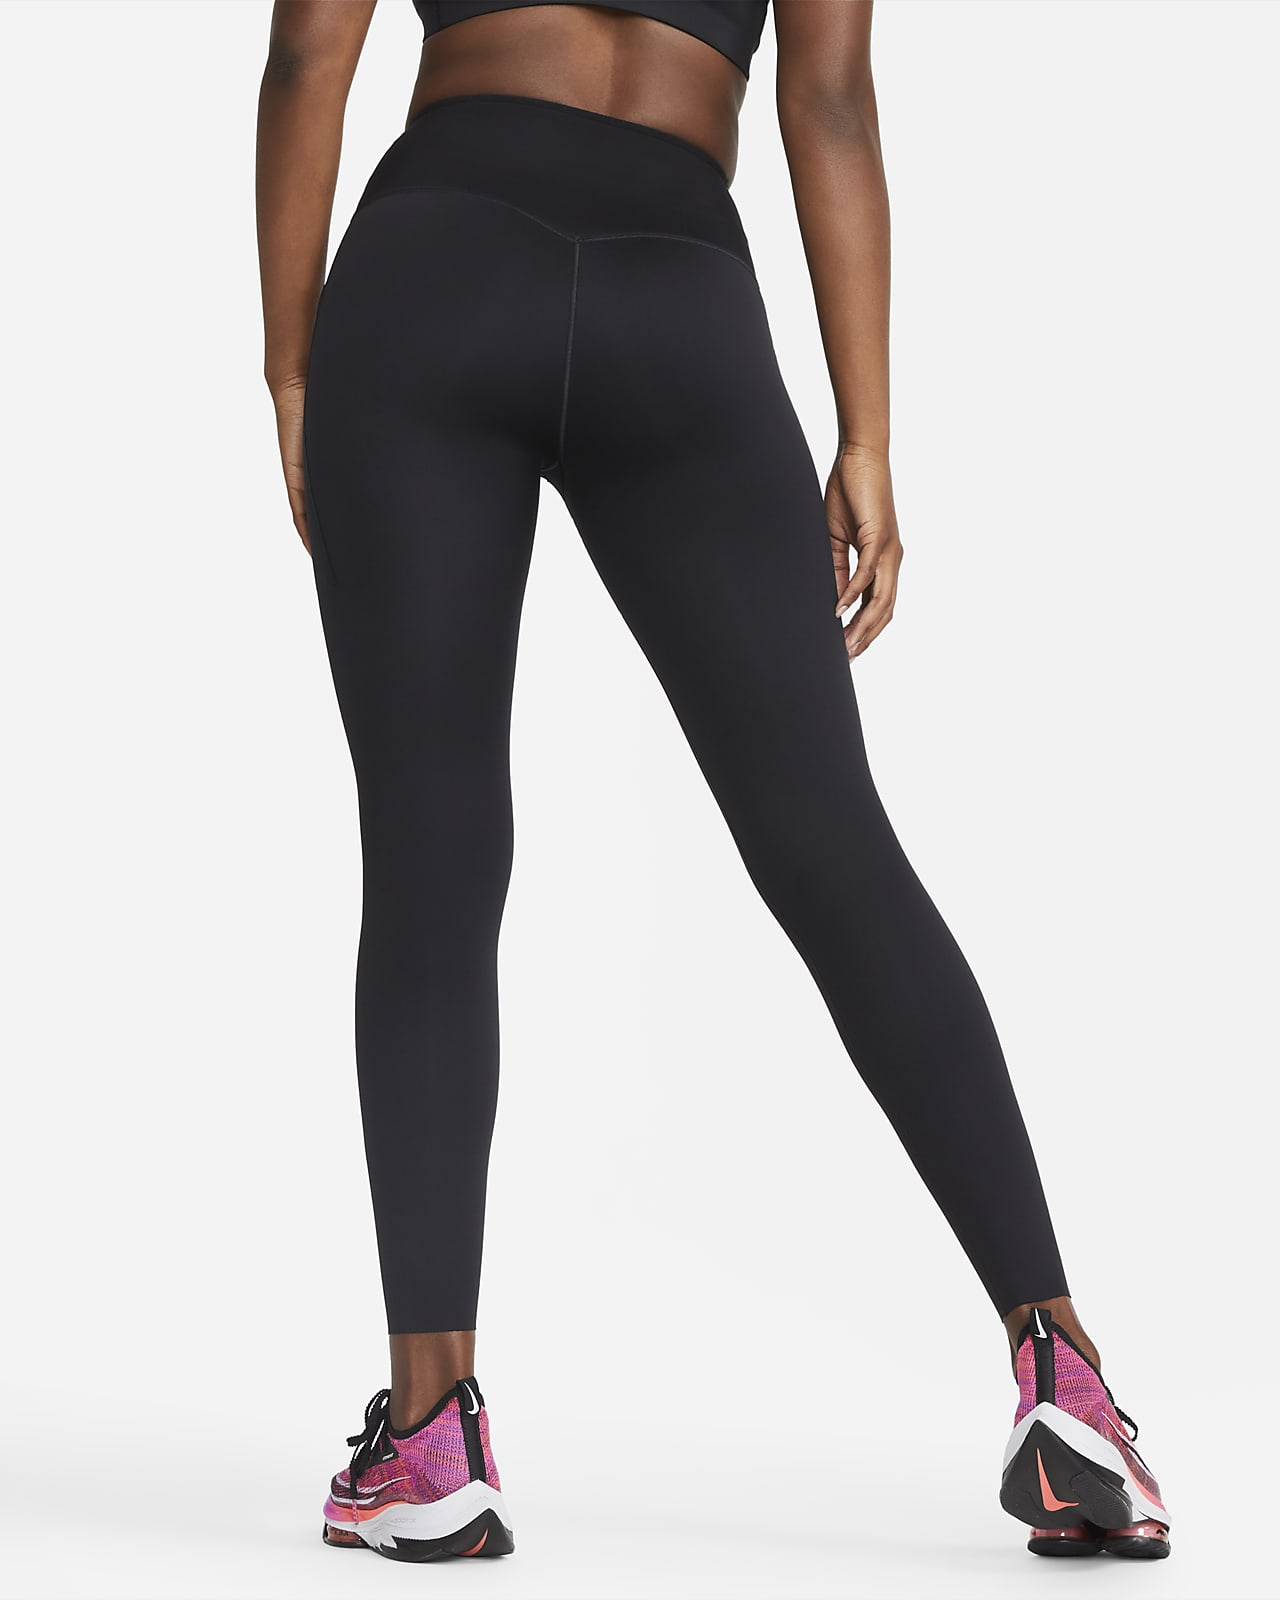 NWT Nike Womens Leggings Small  Nike women, Women's leggings